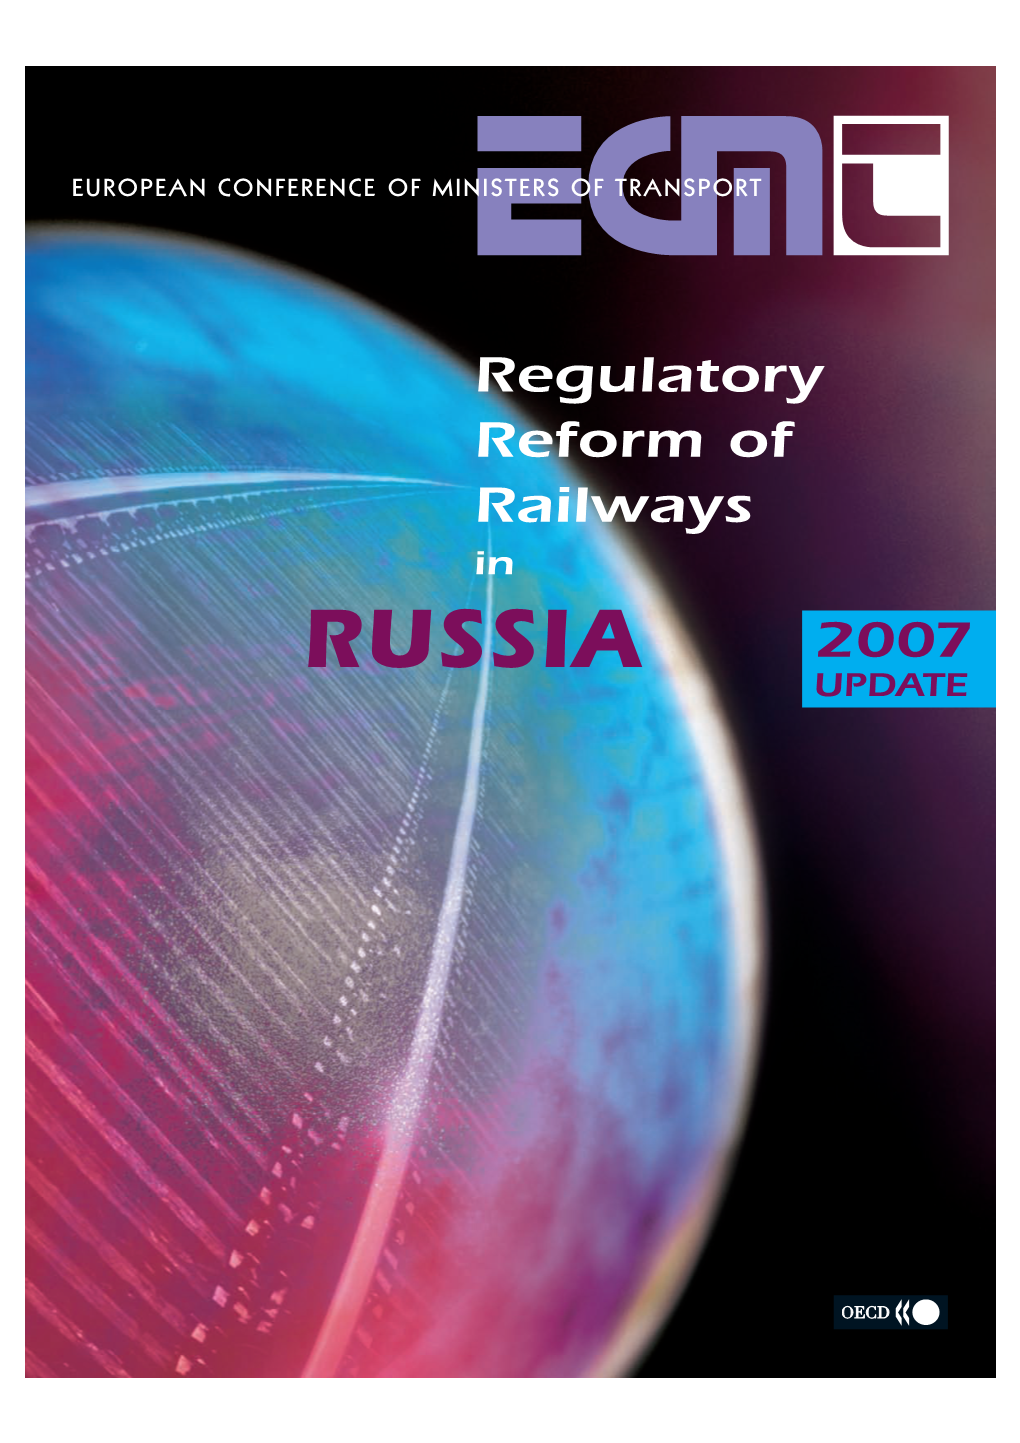 Regulatory Reform of Railways in RUSSIA 2007 UPDATE UPDATE 2007 / WEB Release – 3